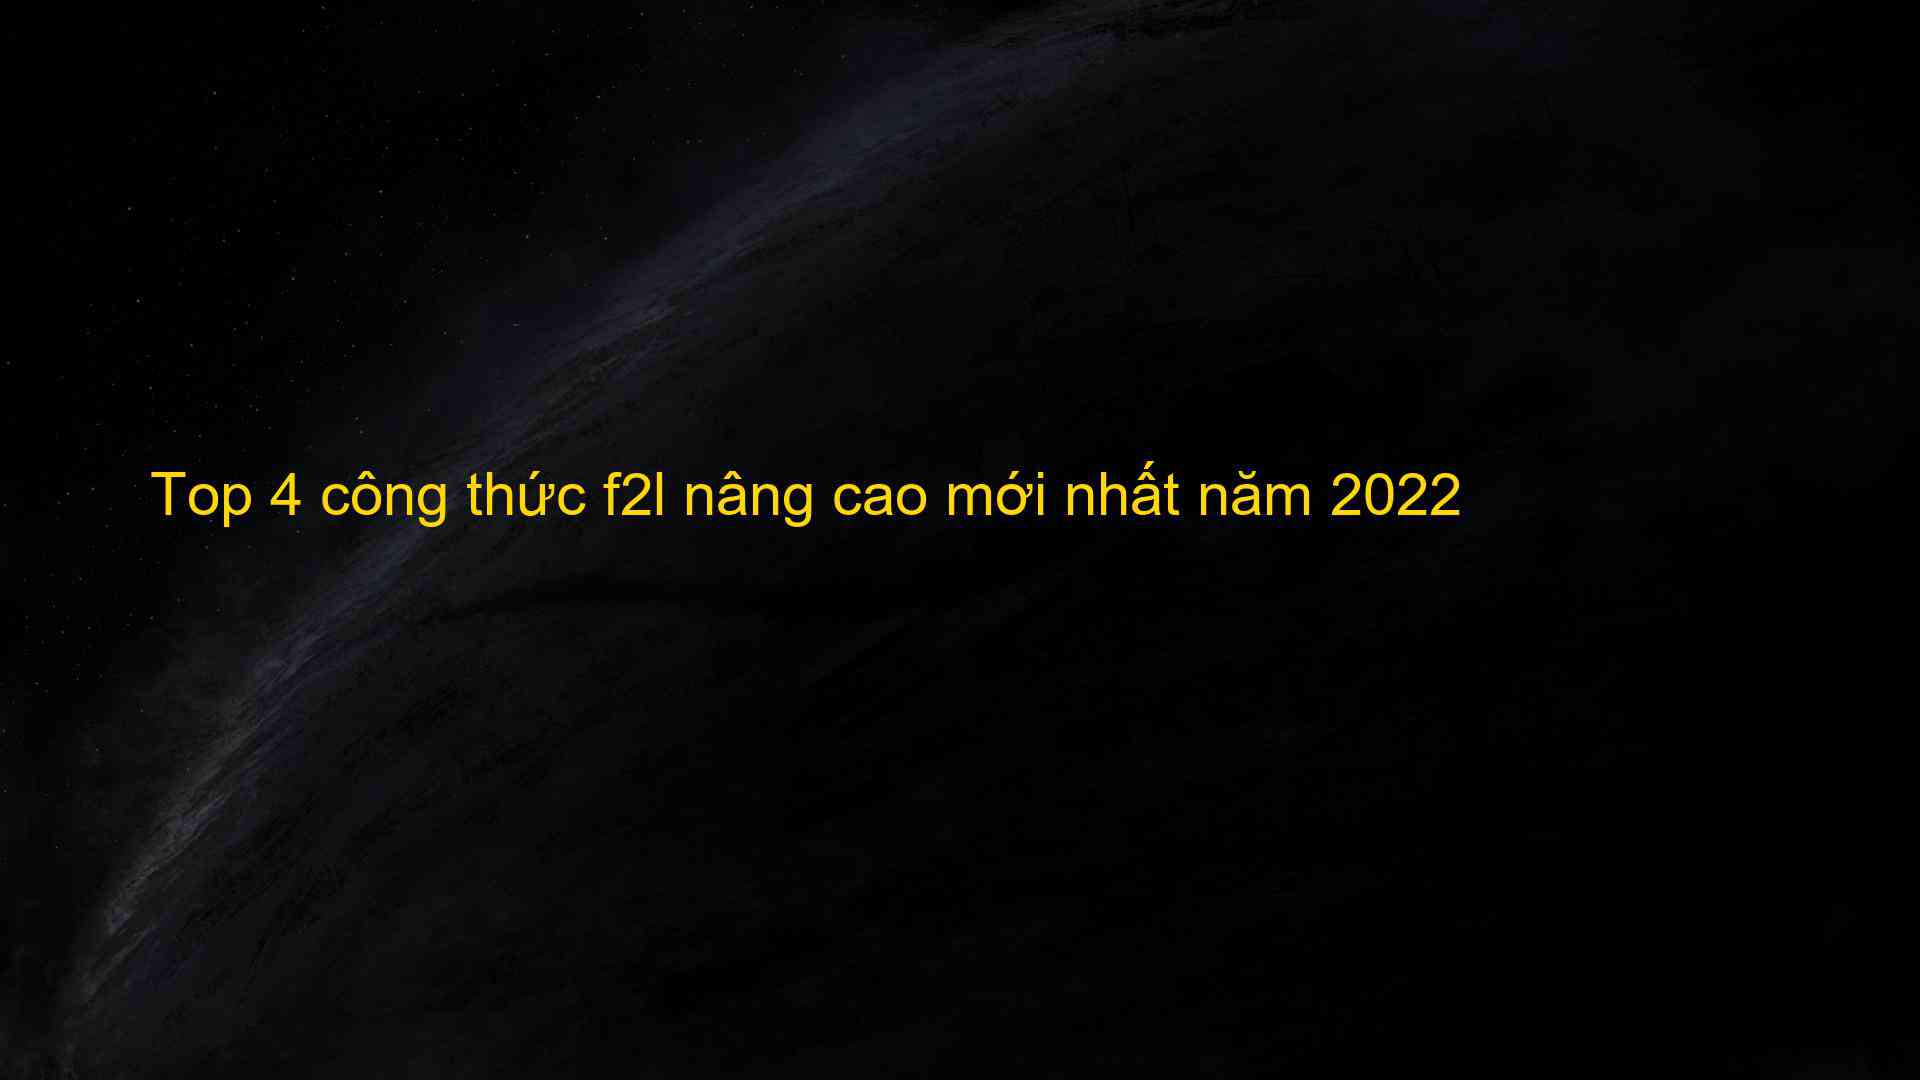 Top 4 cong thuc f2l nang cao moi nhat nam 2022 1659882829